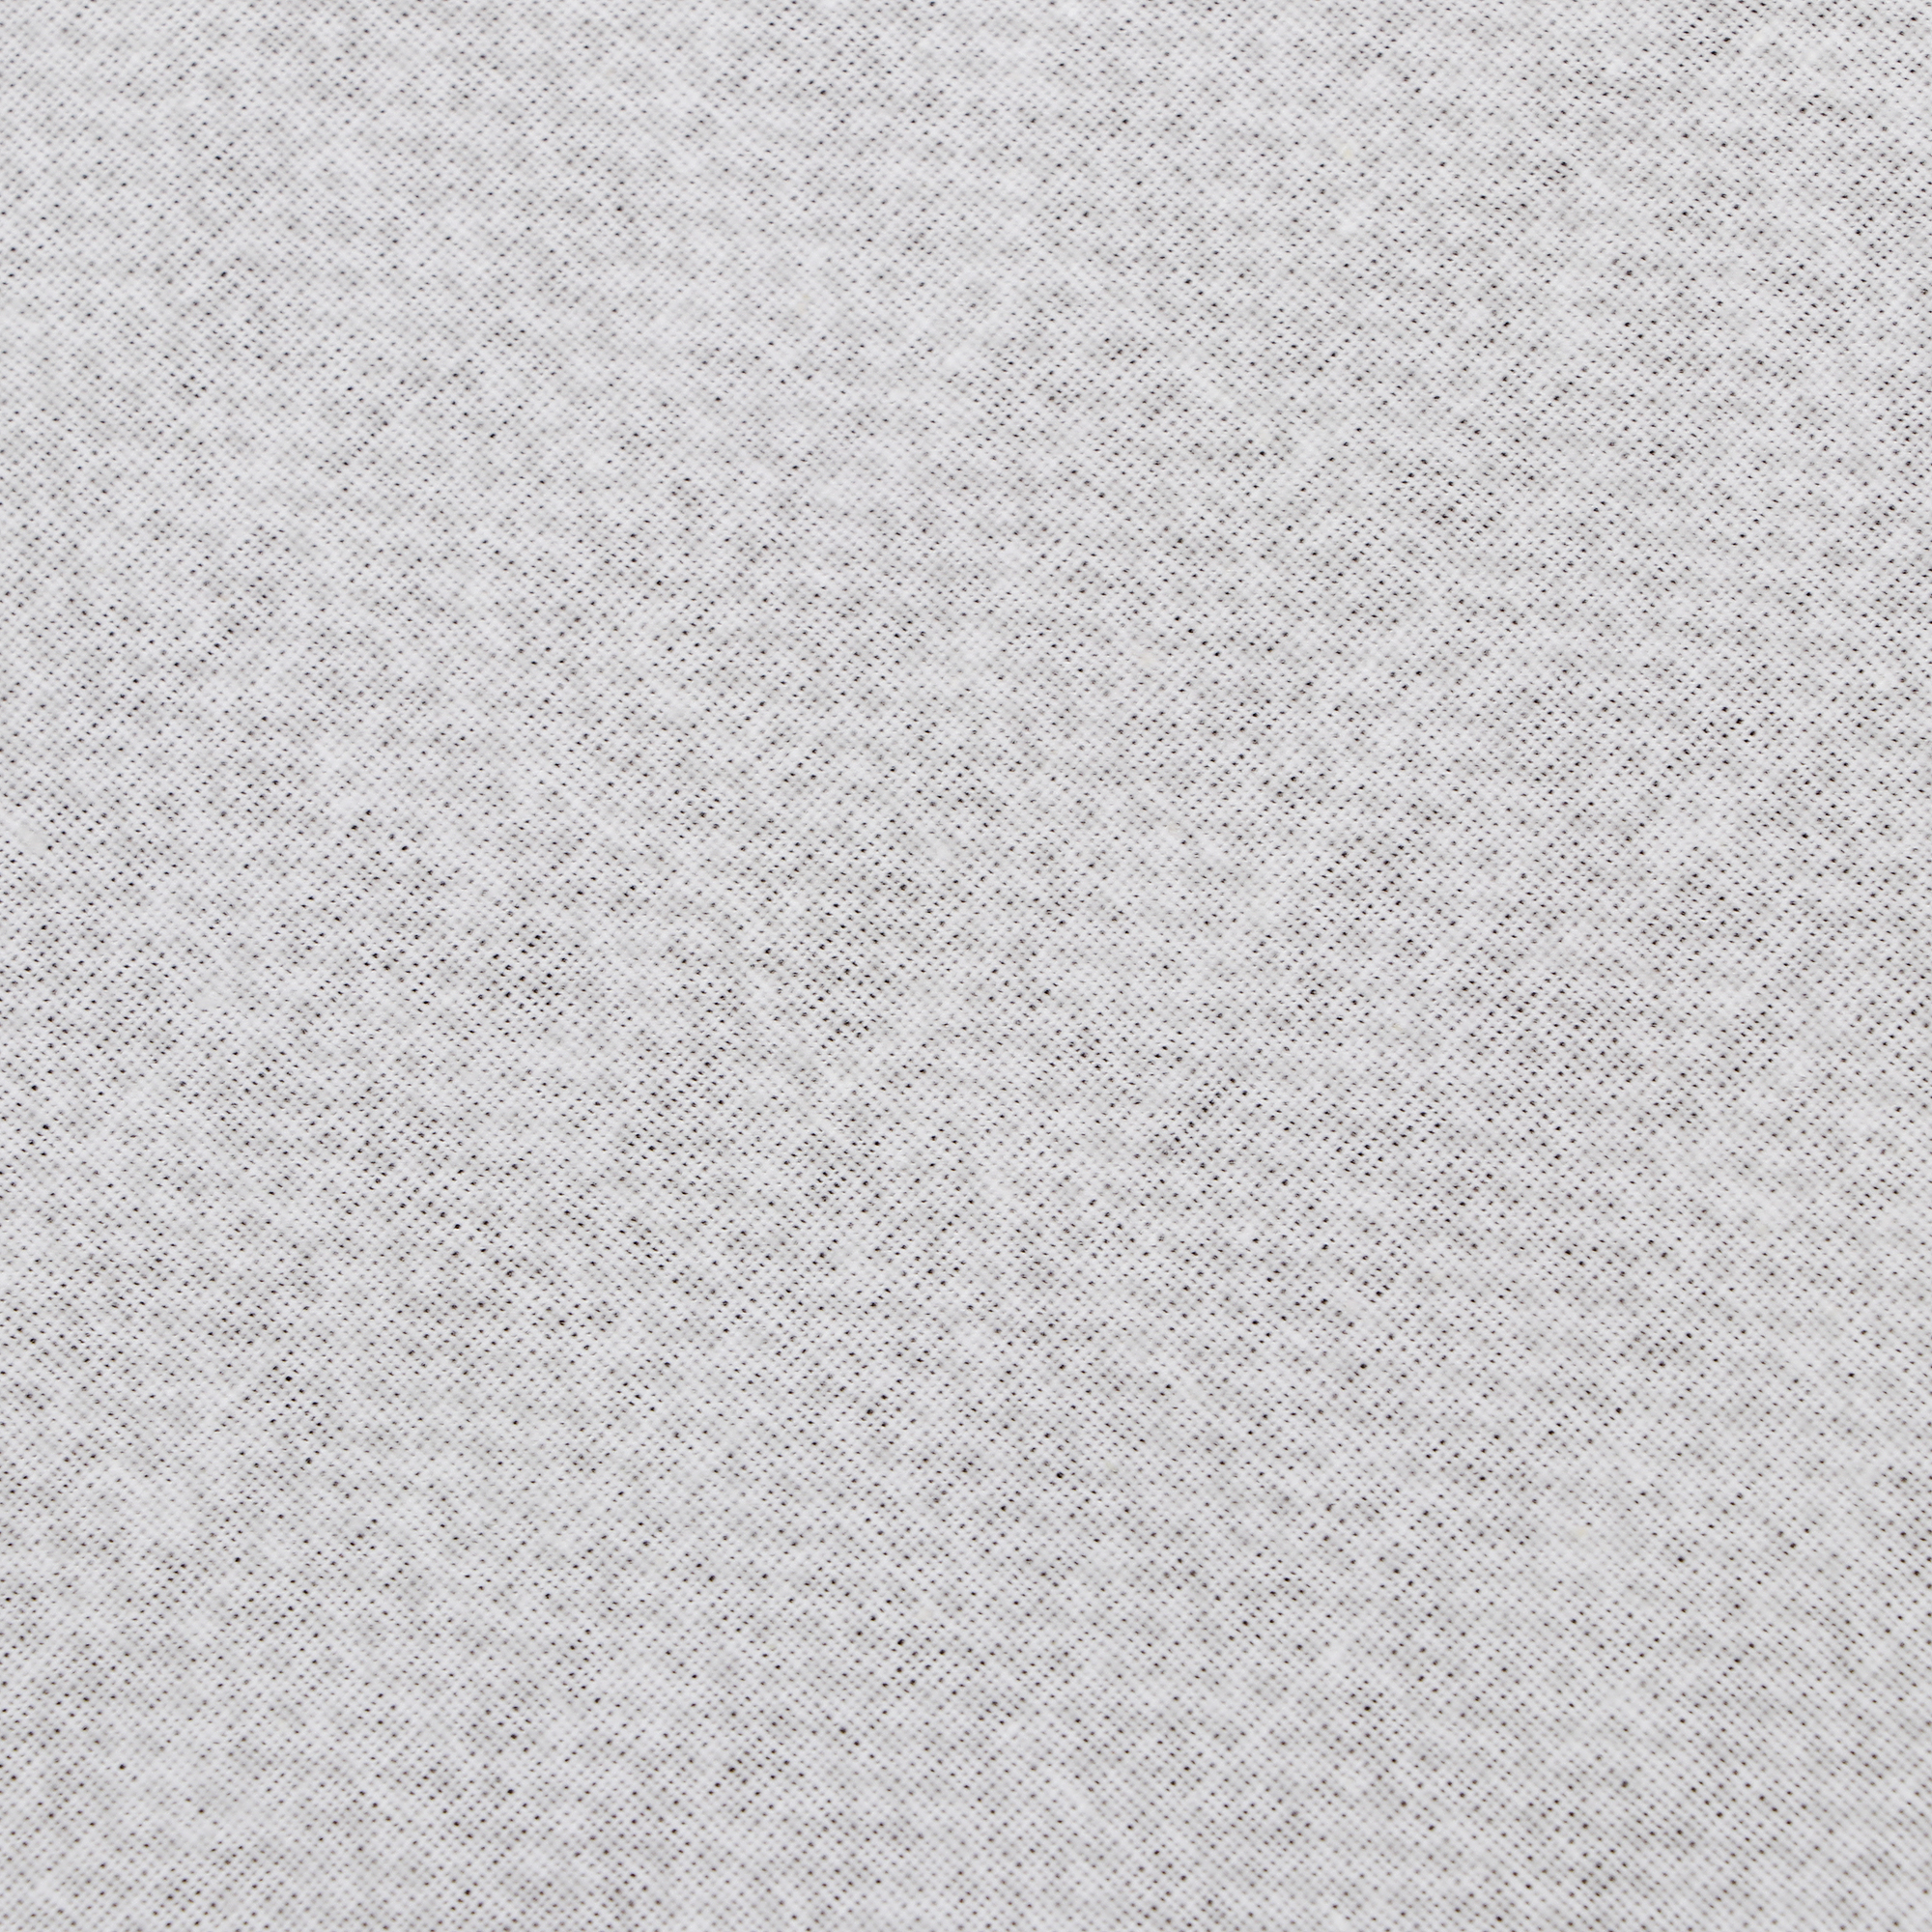 Одеяло Medsleep Sonora белое 140х200 см, цвет белый - фото 6